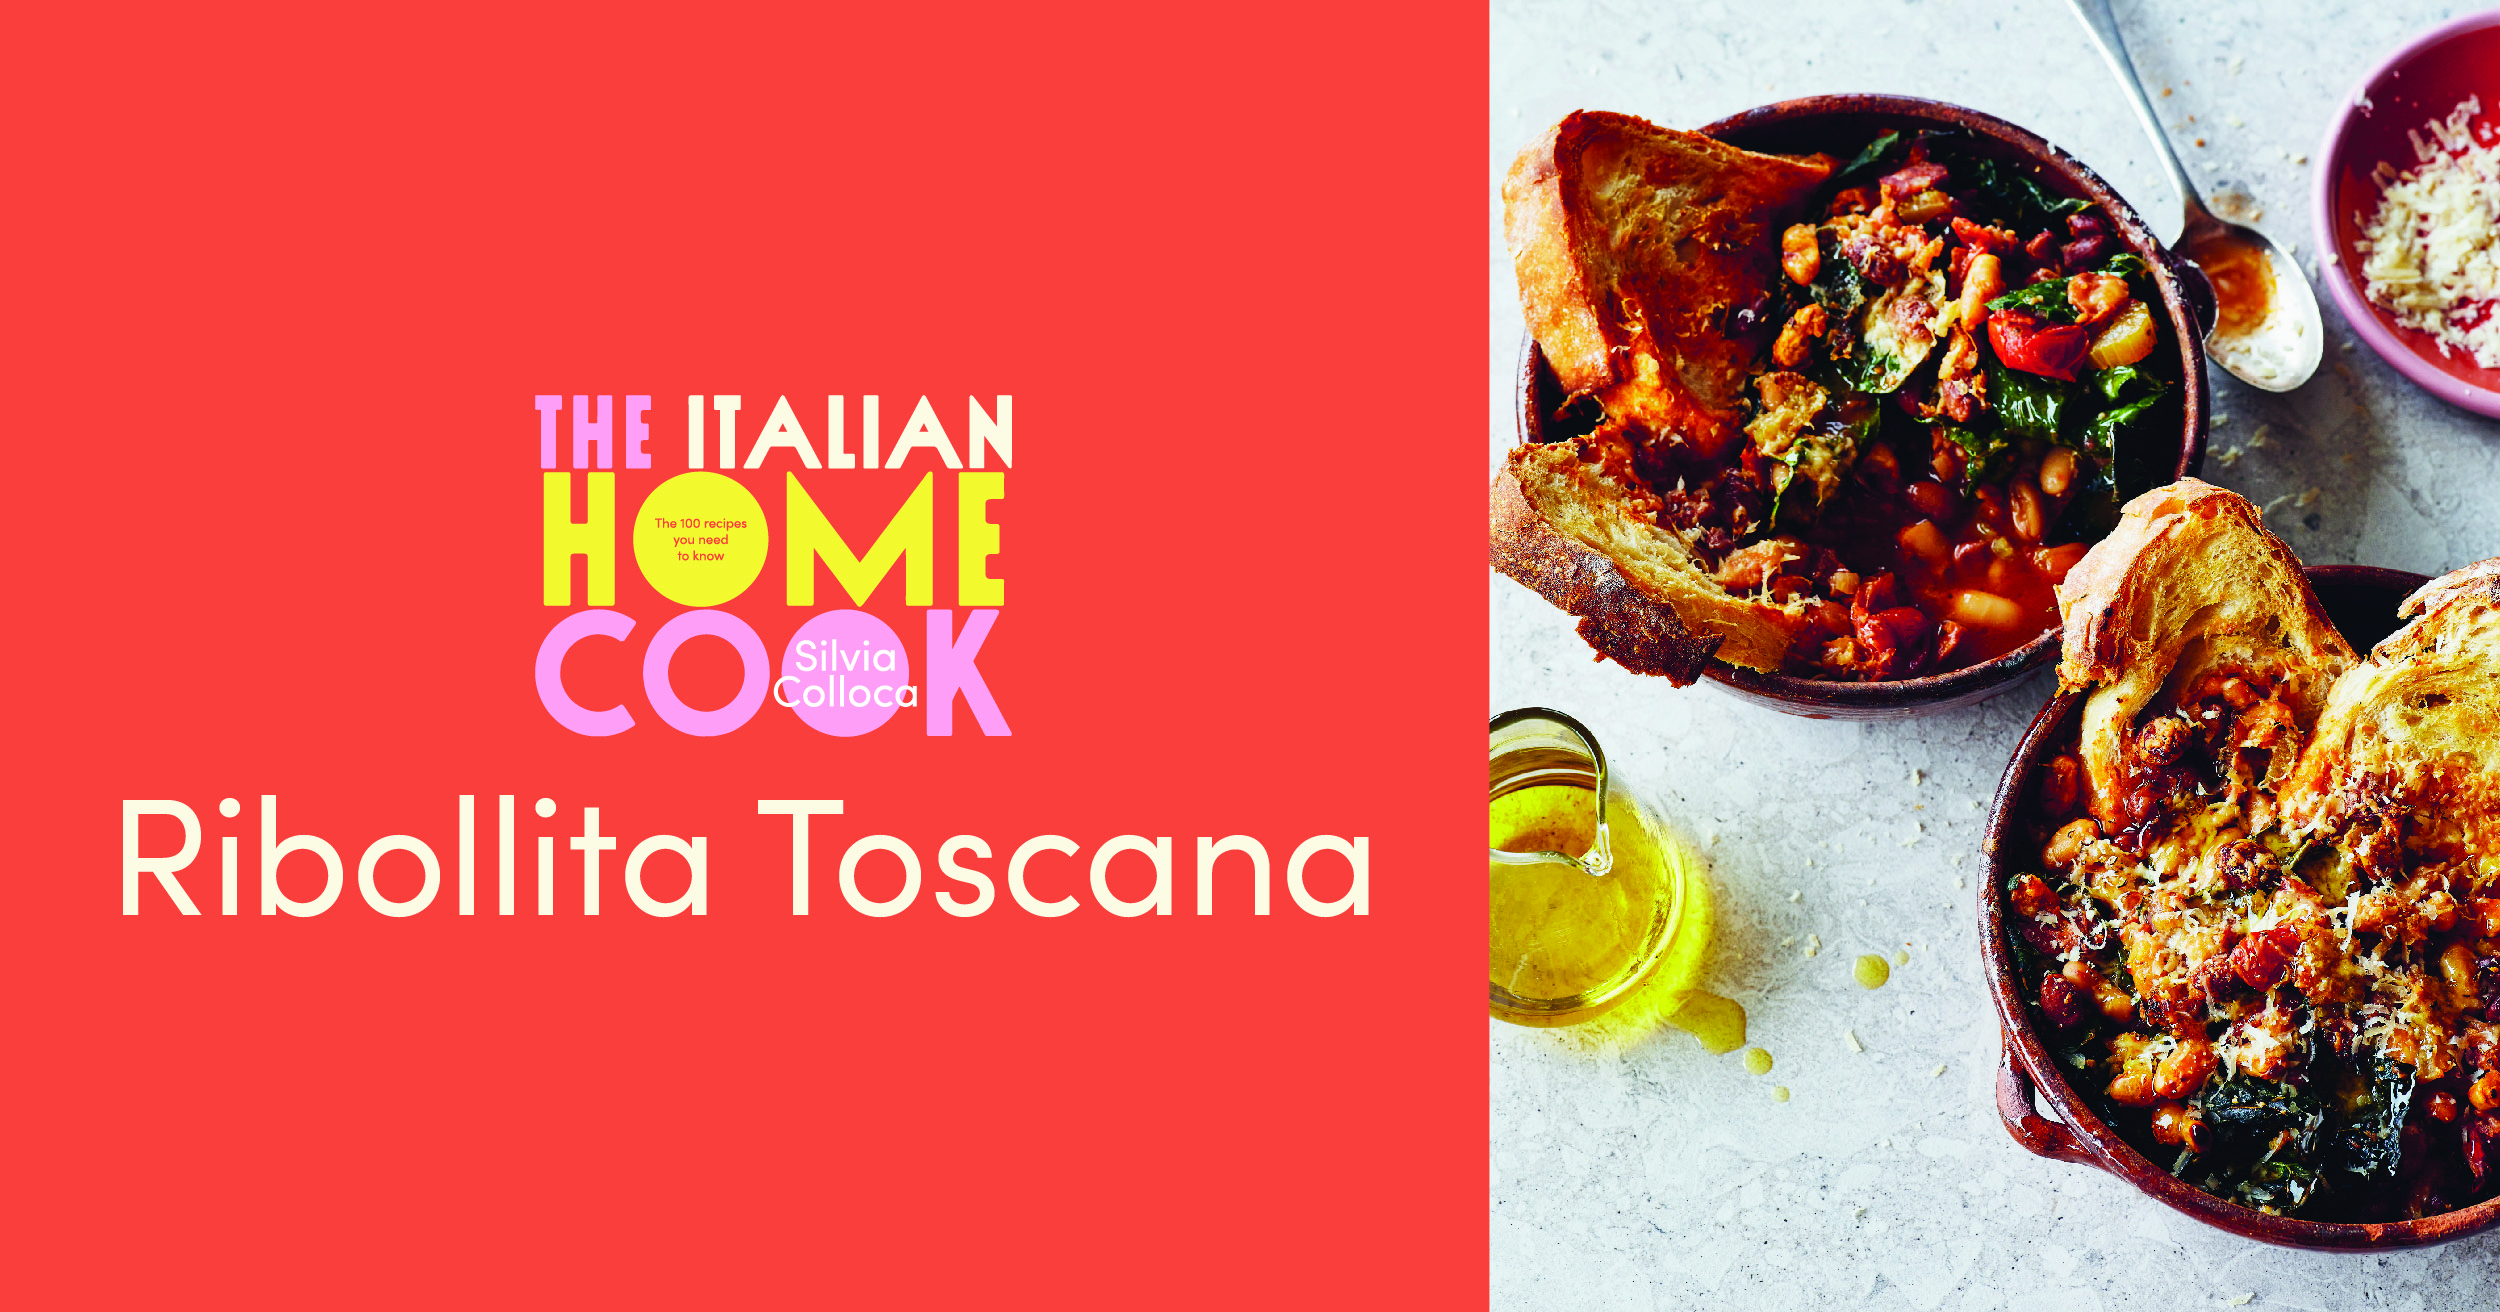 Ribollita Toscana from The Italian Home Cook by Silvia Colloca